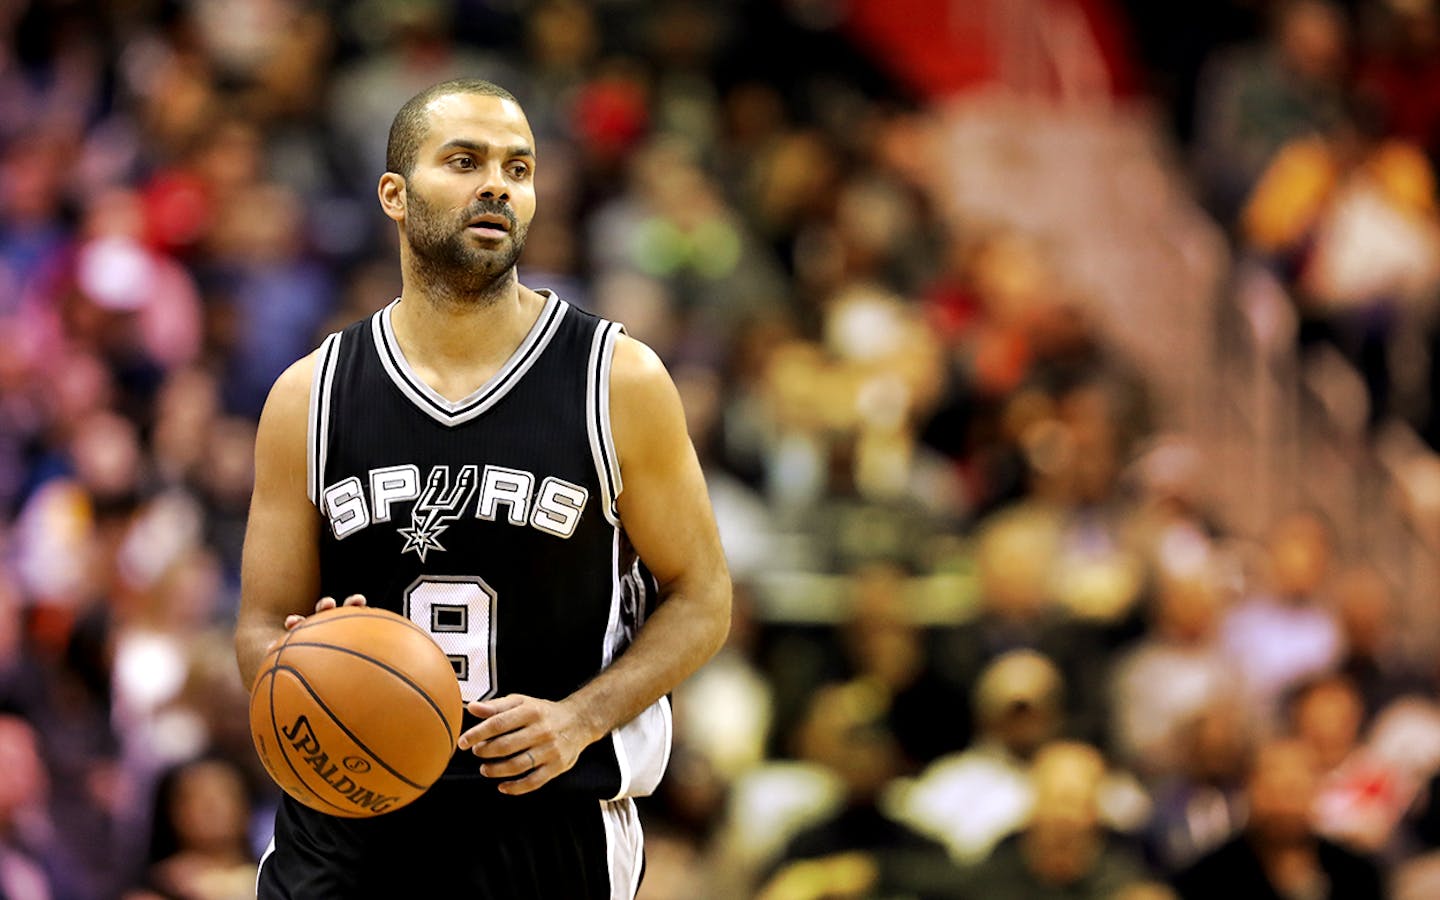 Tony Parker, Last of the San Antonio Spurs' Dynastic Big Three, Is